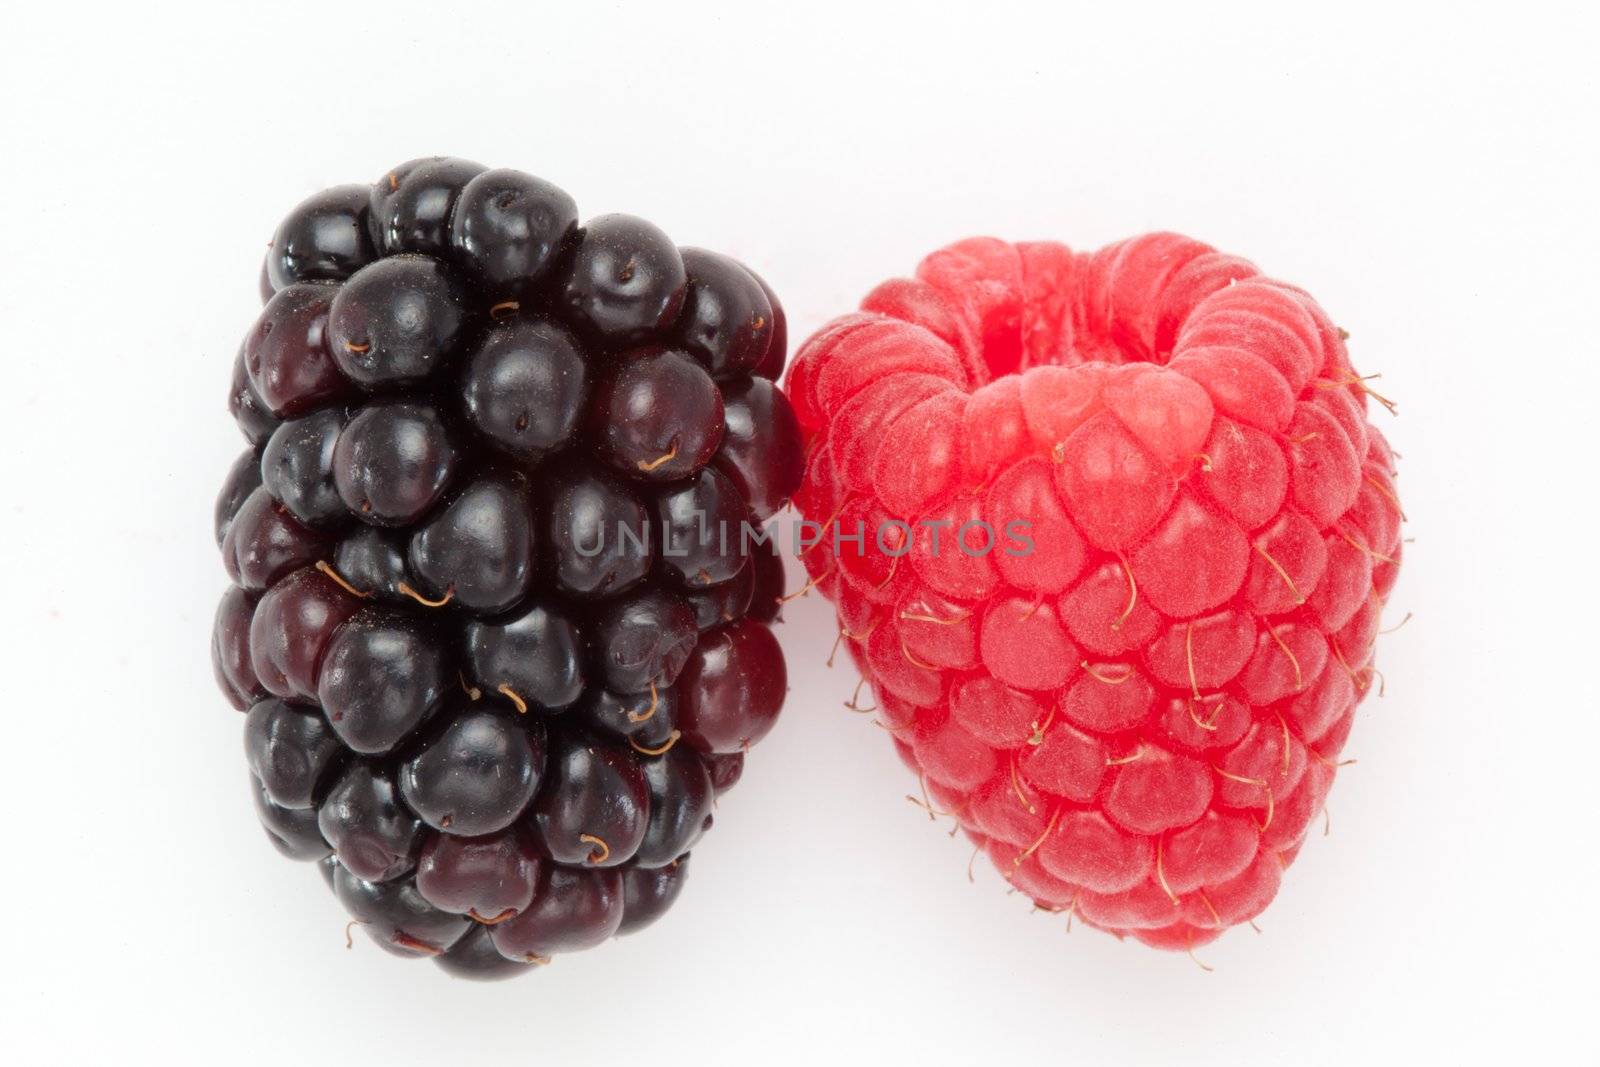 Blackberry and Raspberry by Wavebreakmedia